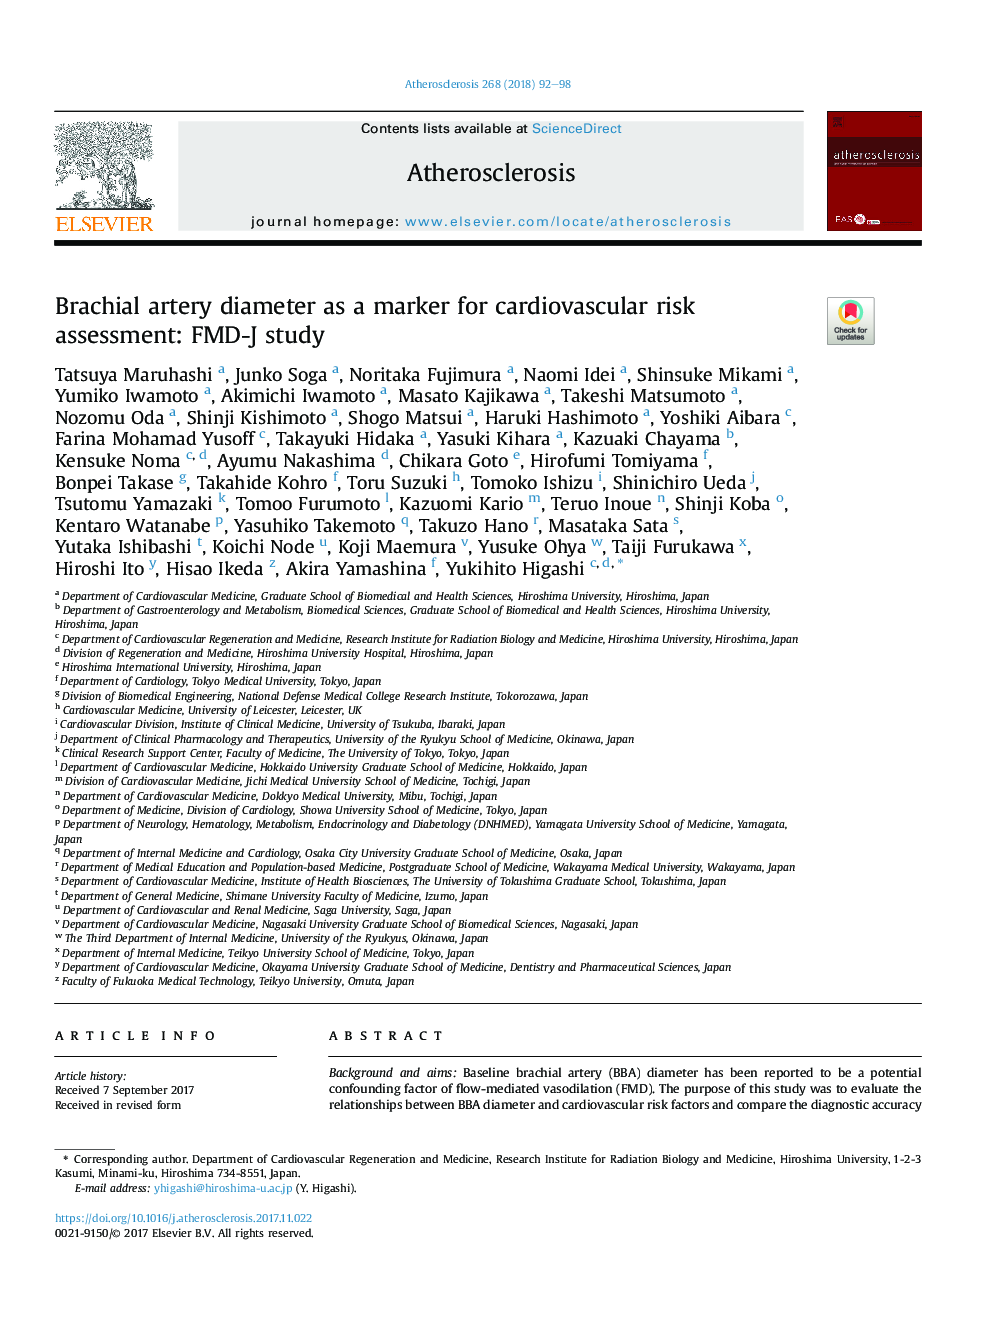 Brachial artery diameter as a marker for cardiovascular risk assessment: FMD-J study